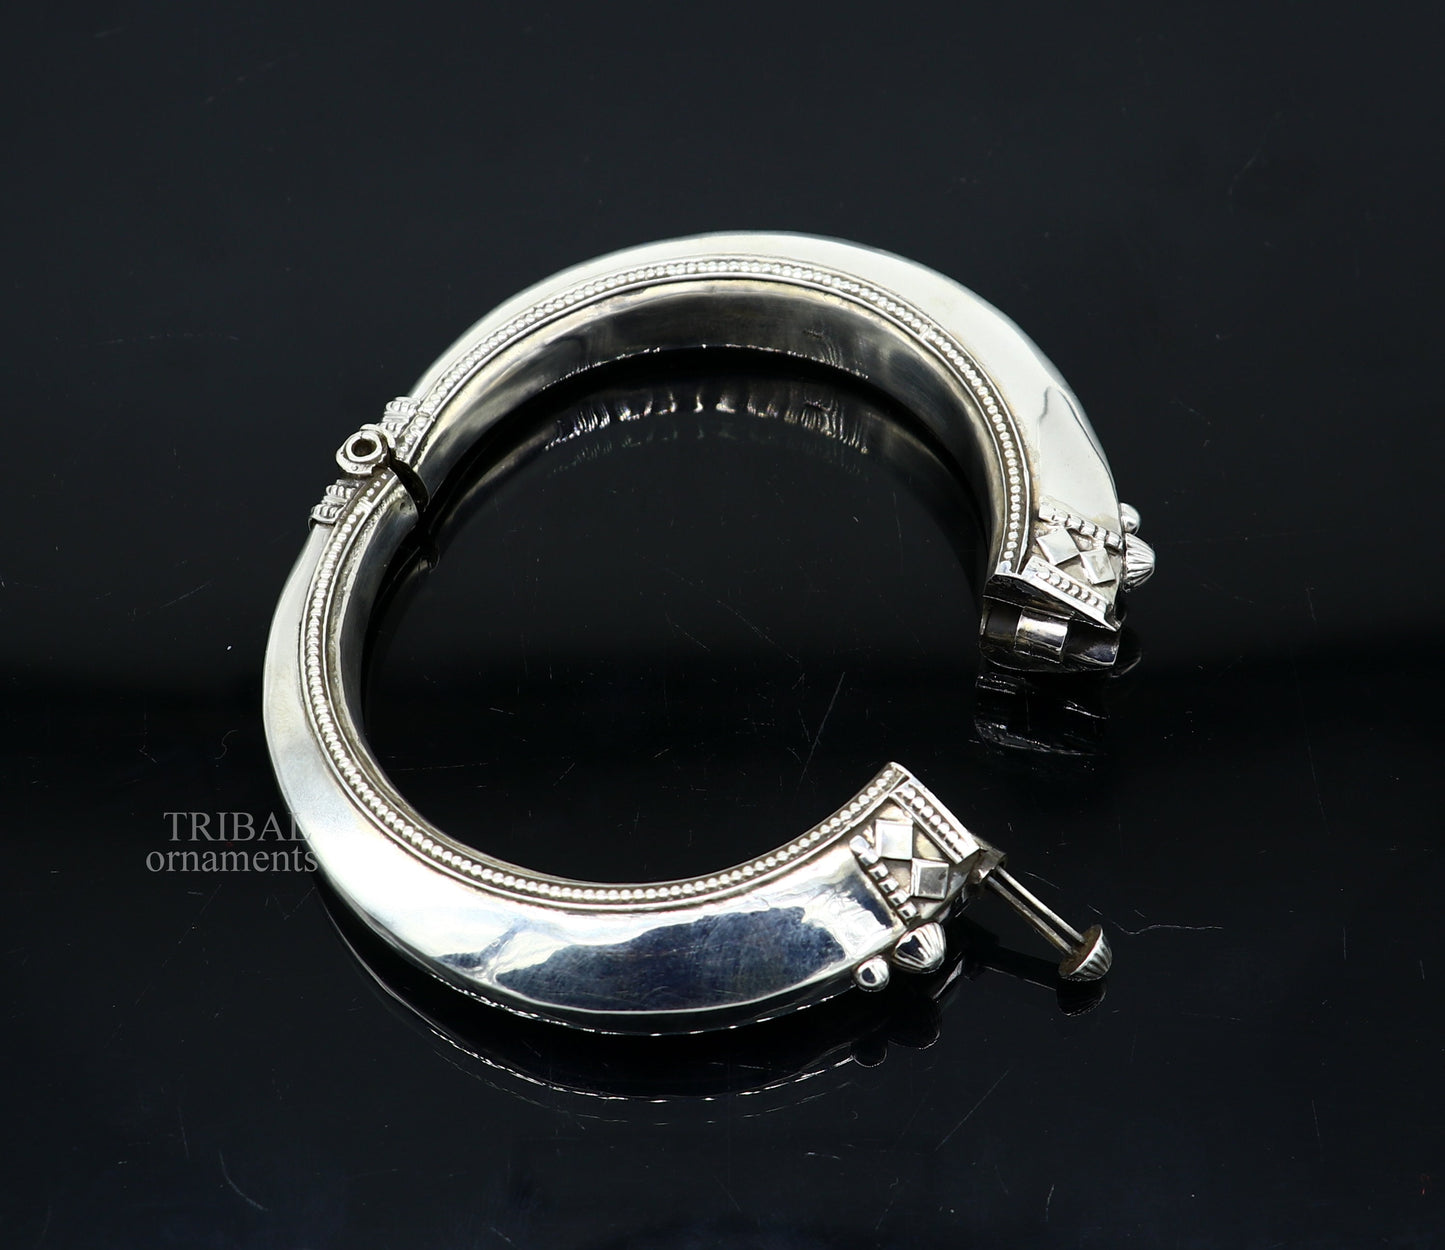 925 sterling silver vintage plain design handmade open face adjustable bangle bracelet kada cuff bracelet for unisex ethnic jewelry Rnsk478 - TRIBAL ORNAMENTS